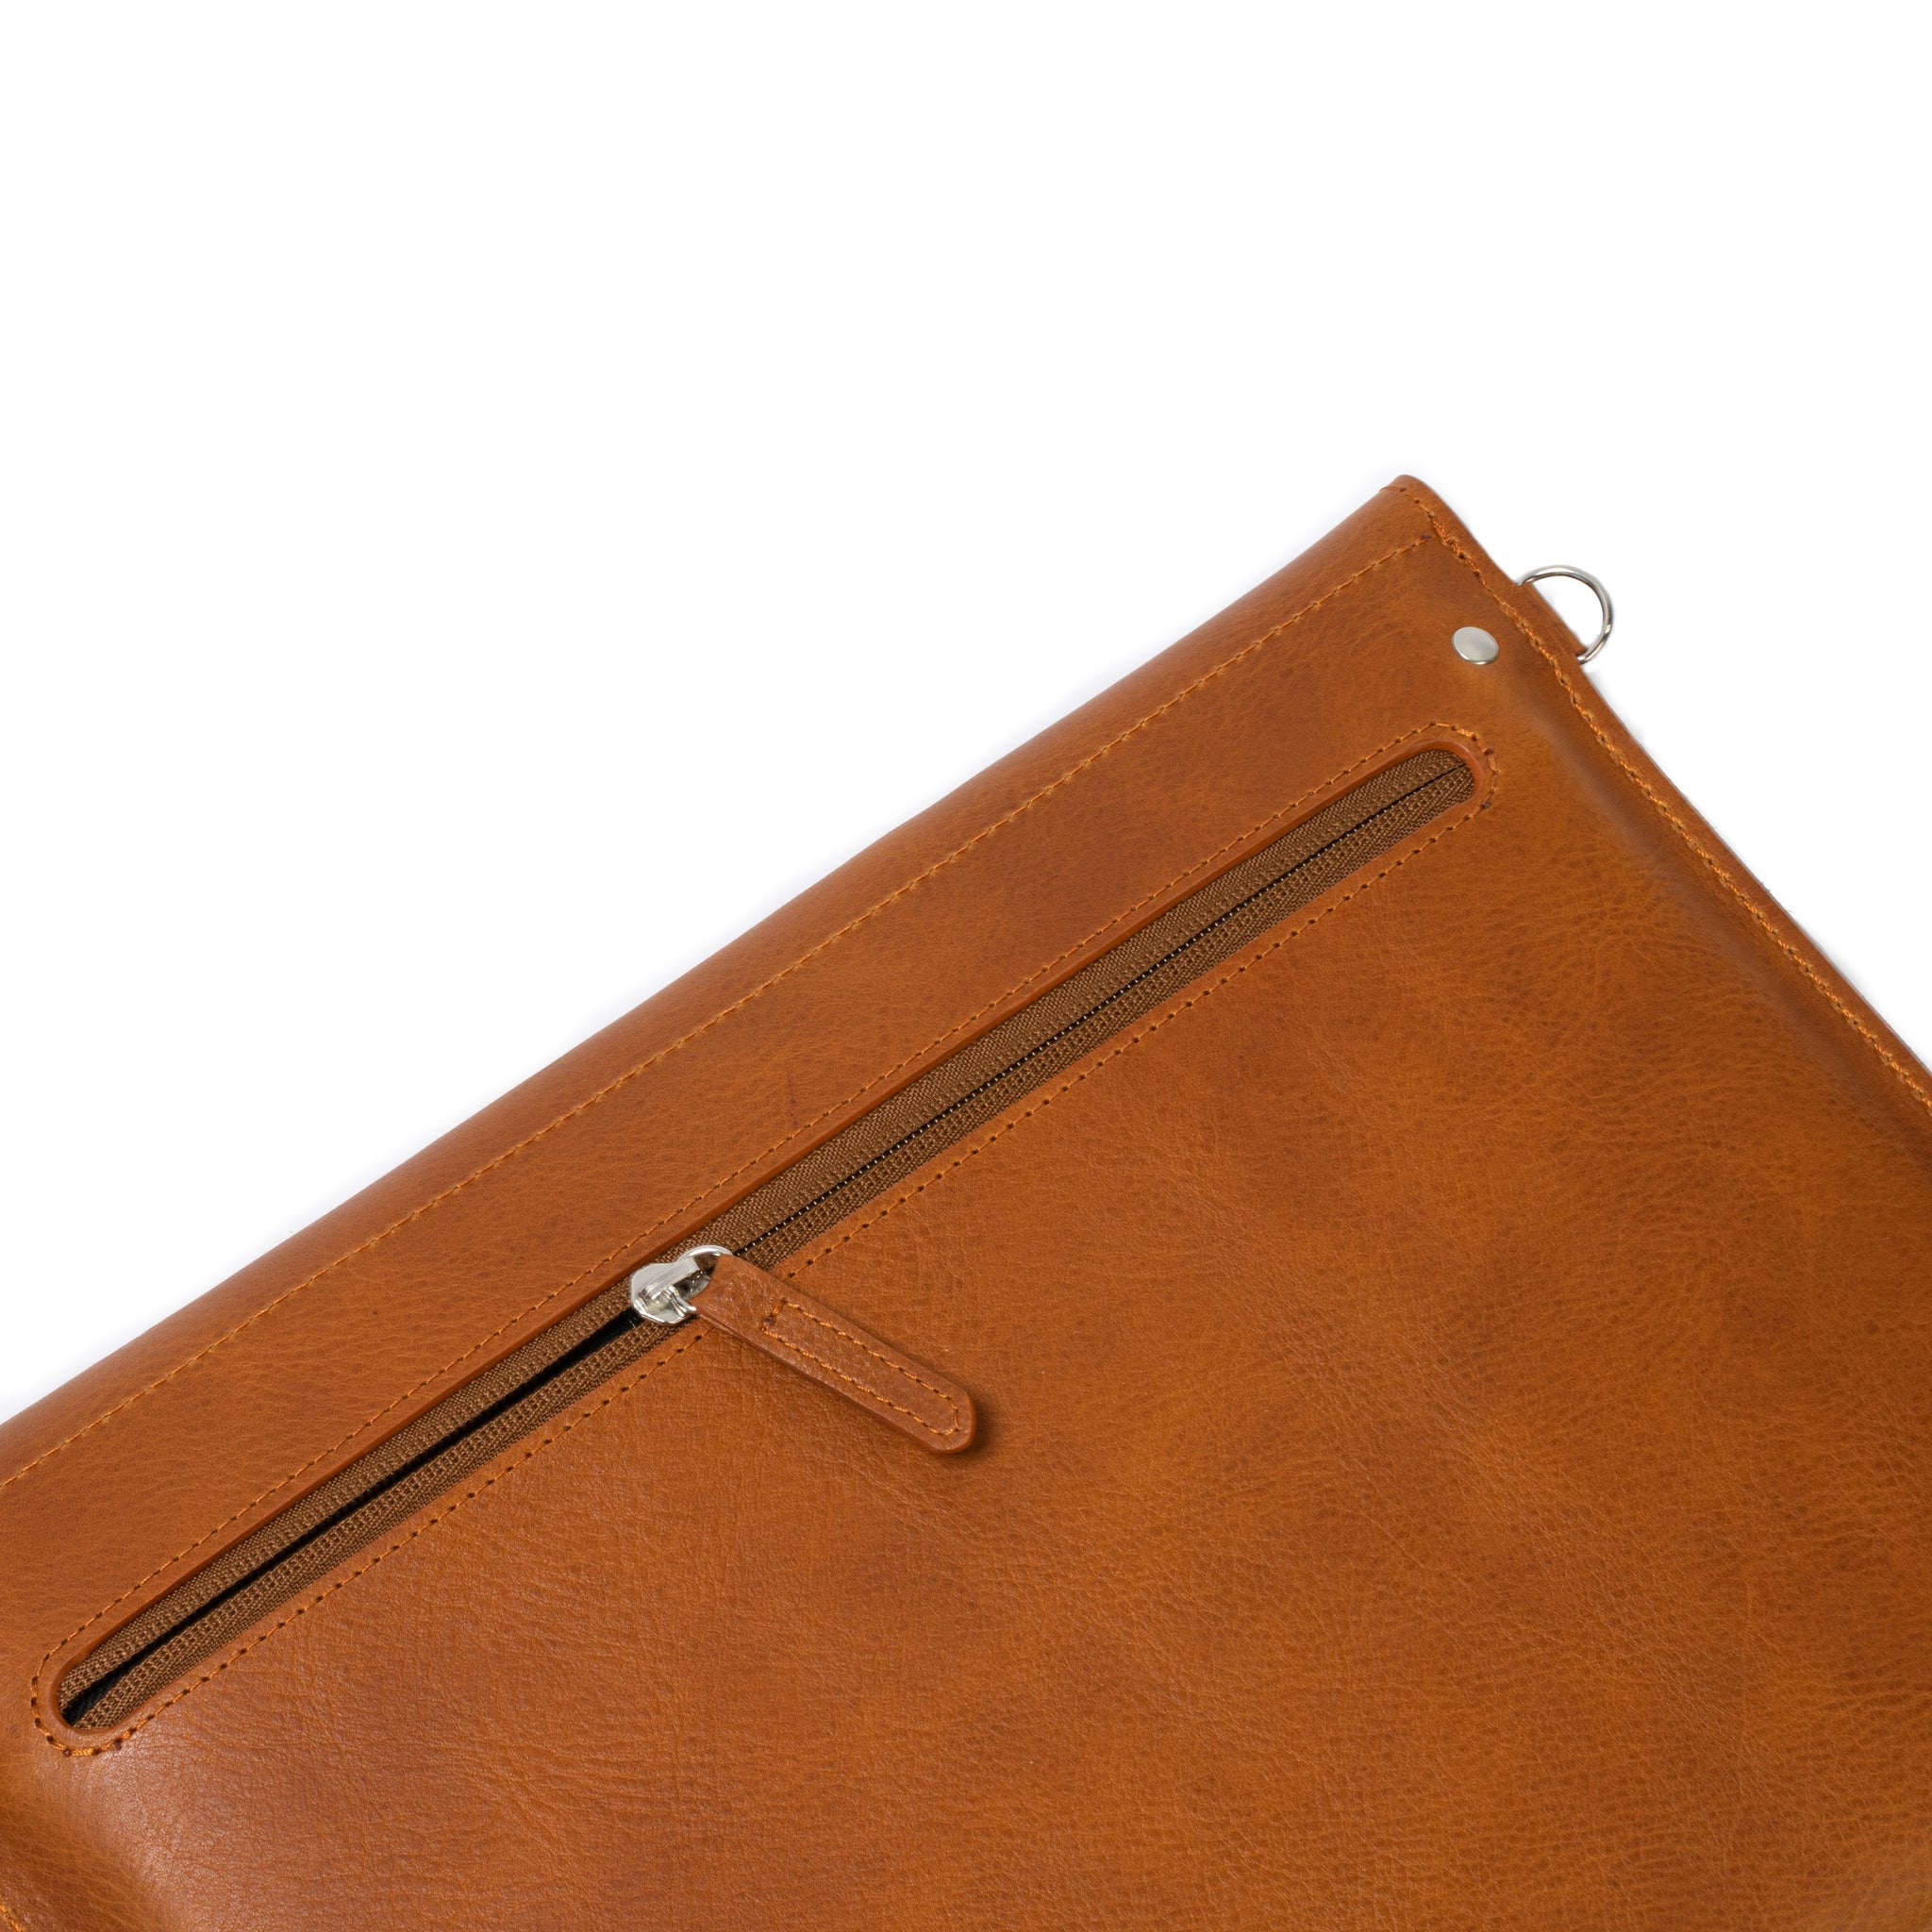 Leather iPad sleeve - Classic 2.0 by Geometric Goods